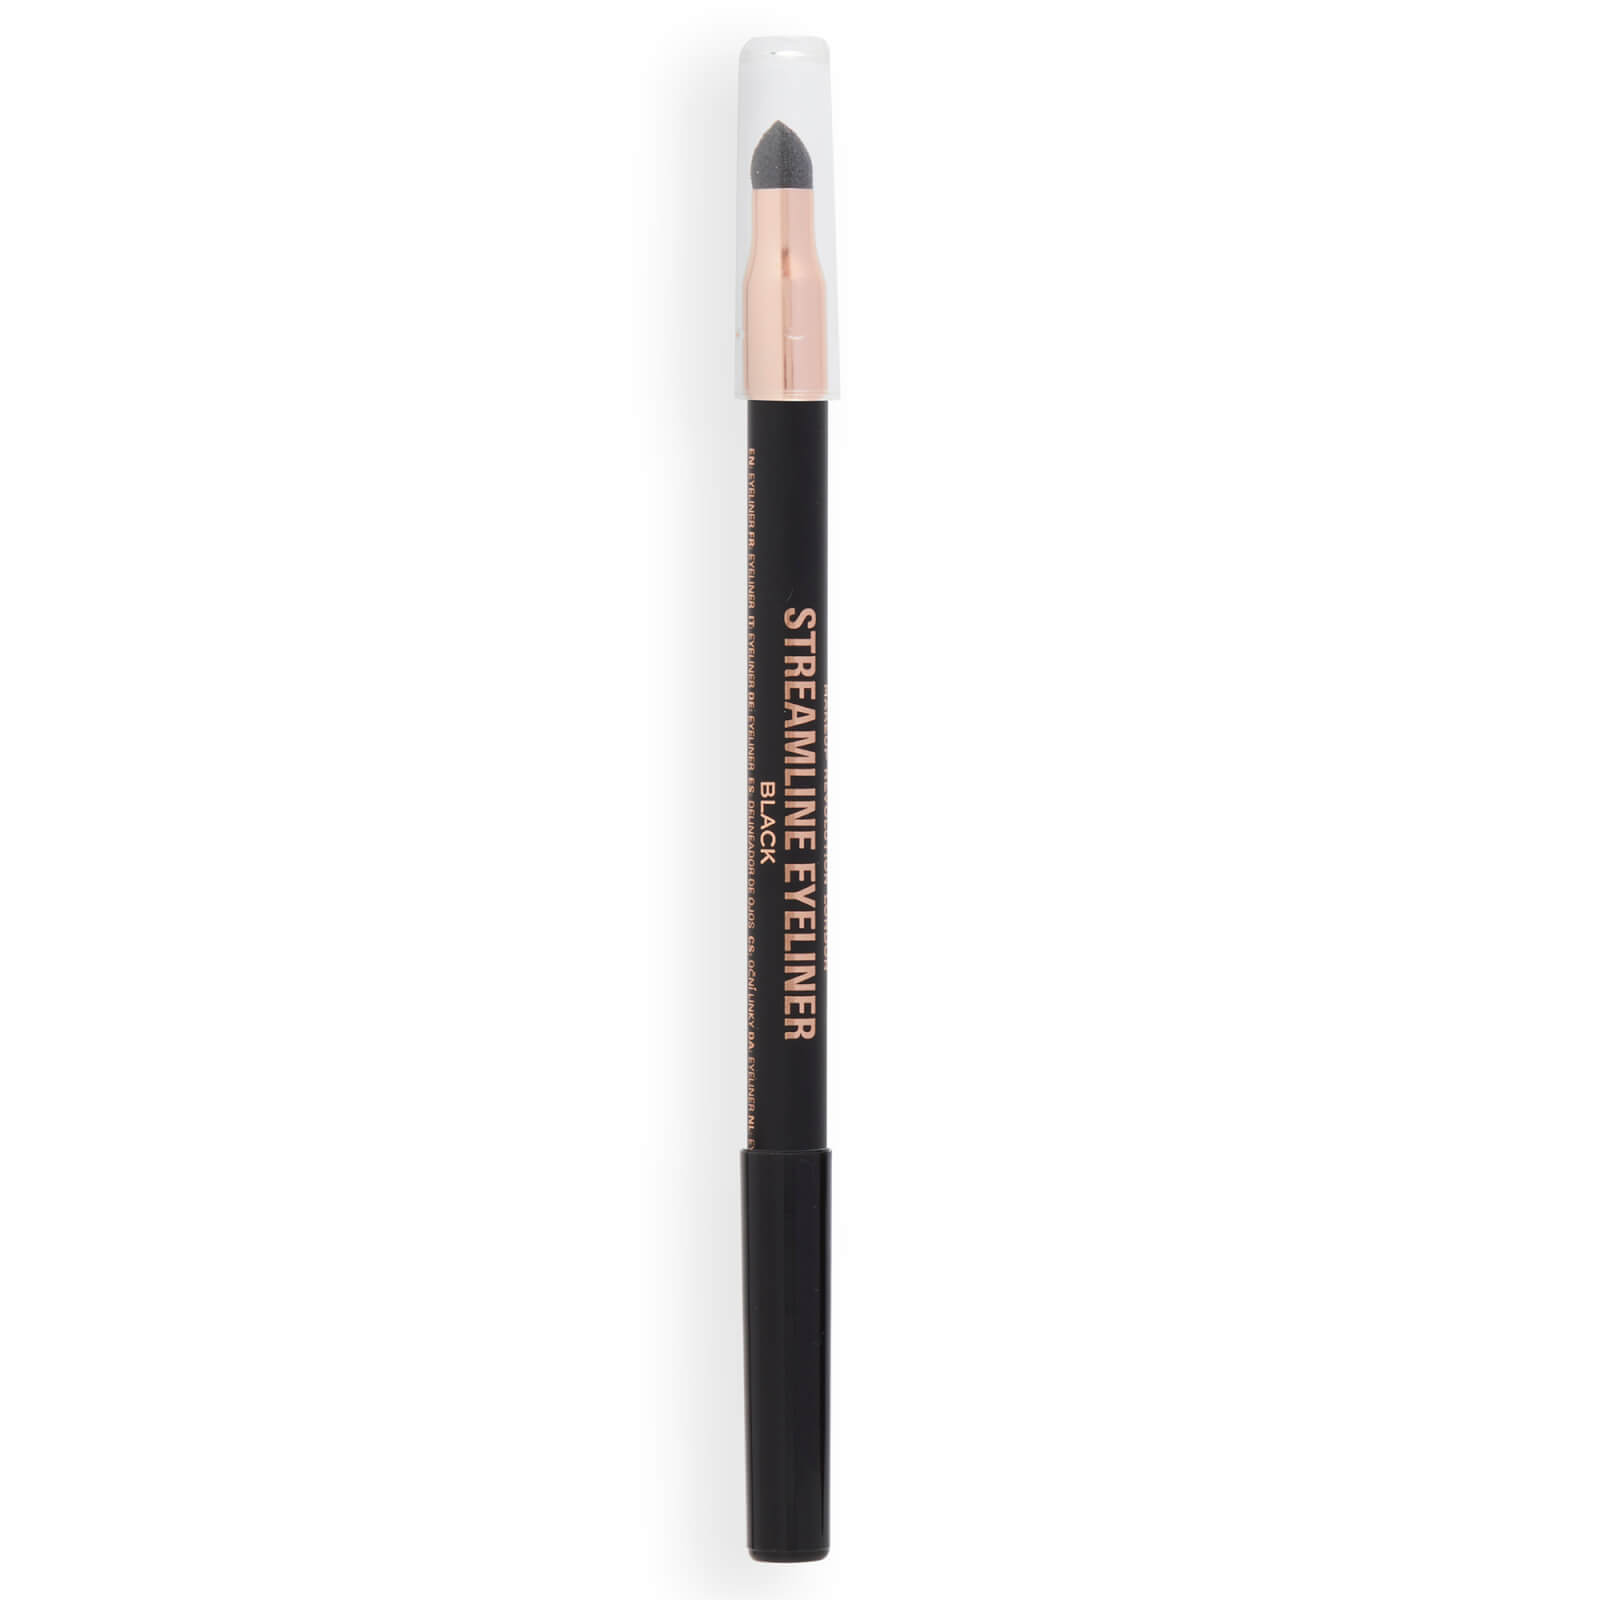 Makeup Revolution Streamline Waterline Eyeliner Pencil (Various Shades) - Black